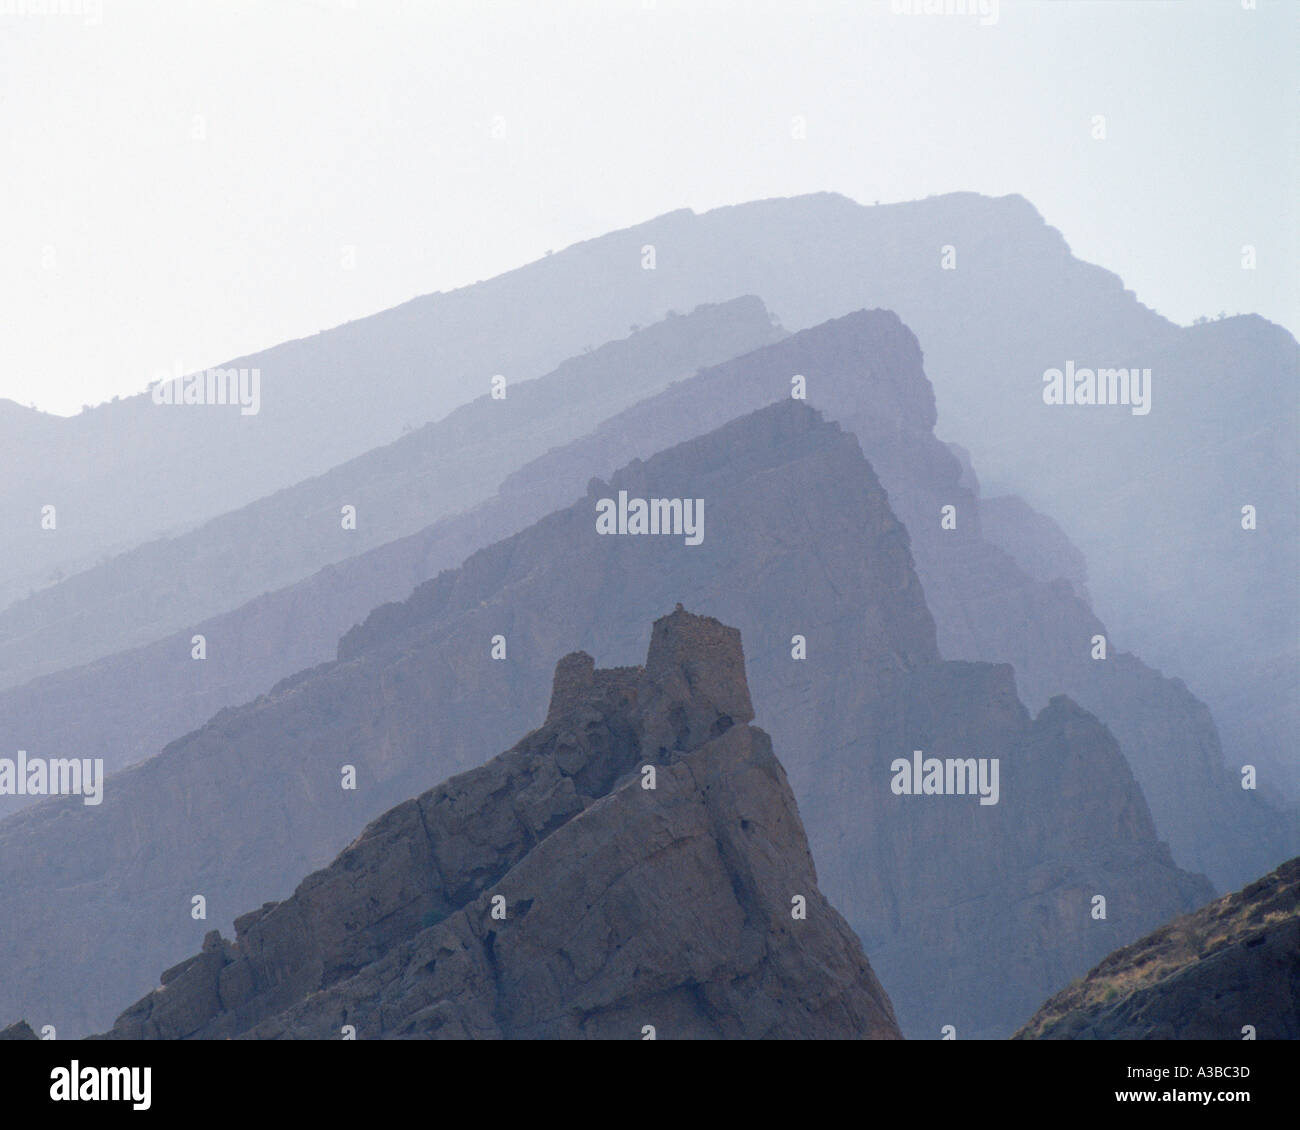 Mountain Ridges Persian Ruin Sultanate of Oman Stock Photo